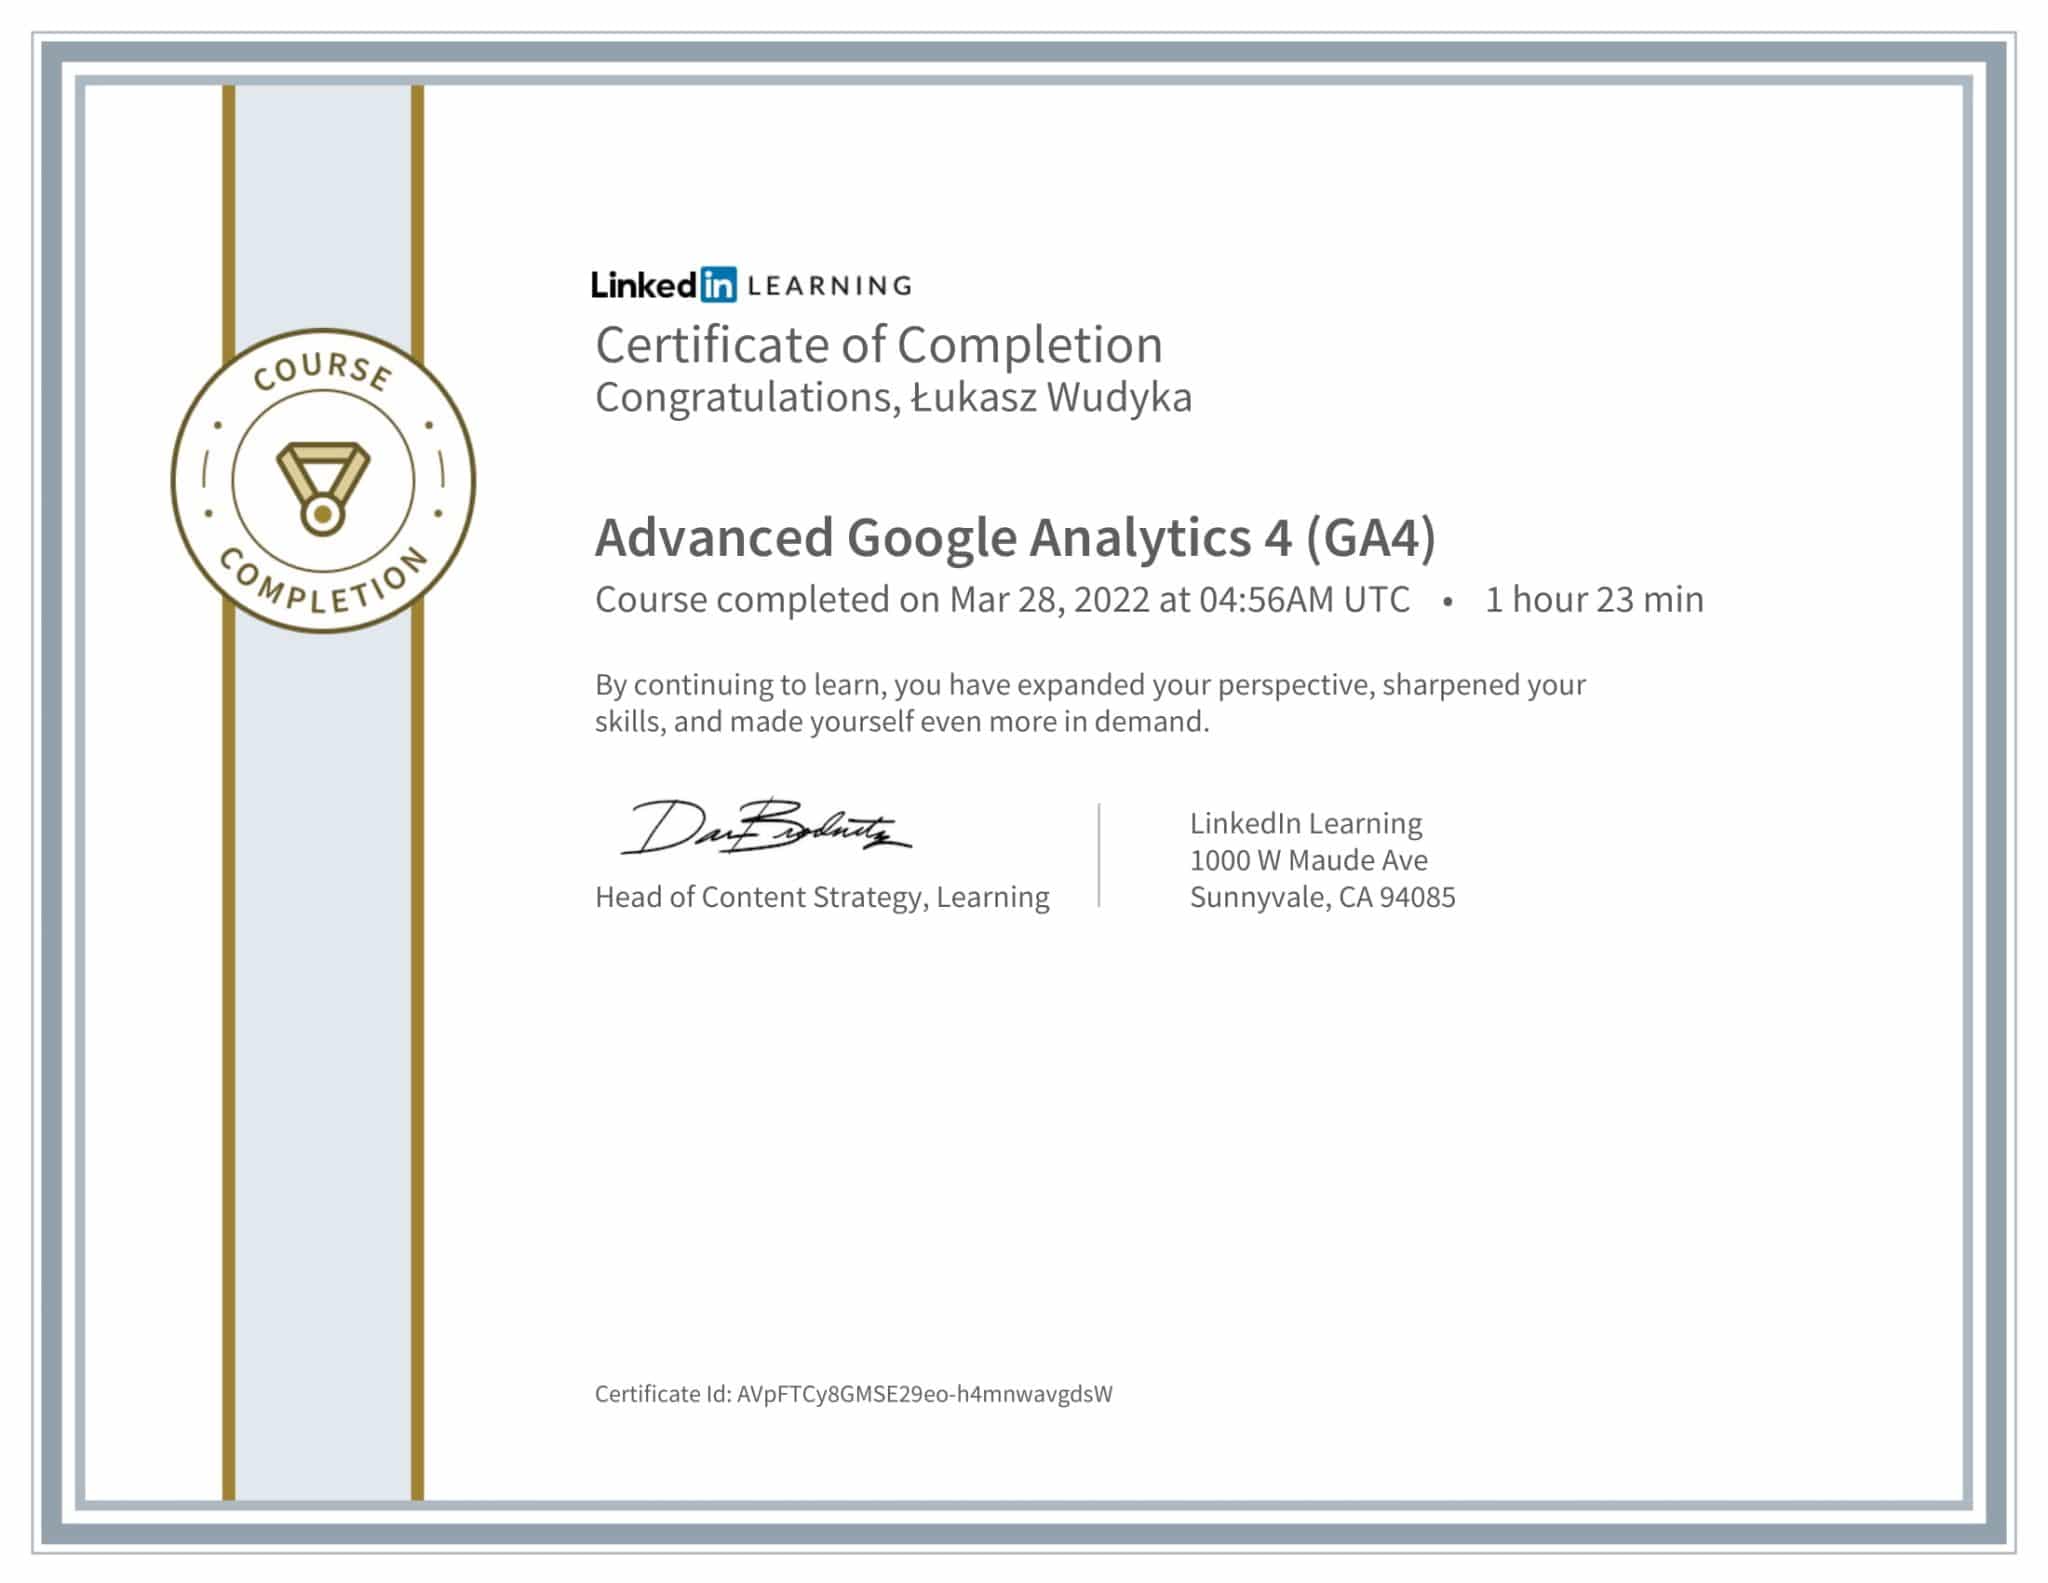 CertificateOfCompletion_Advanced Google Analytics 4 GA4-1